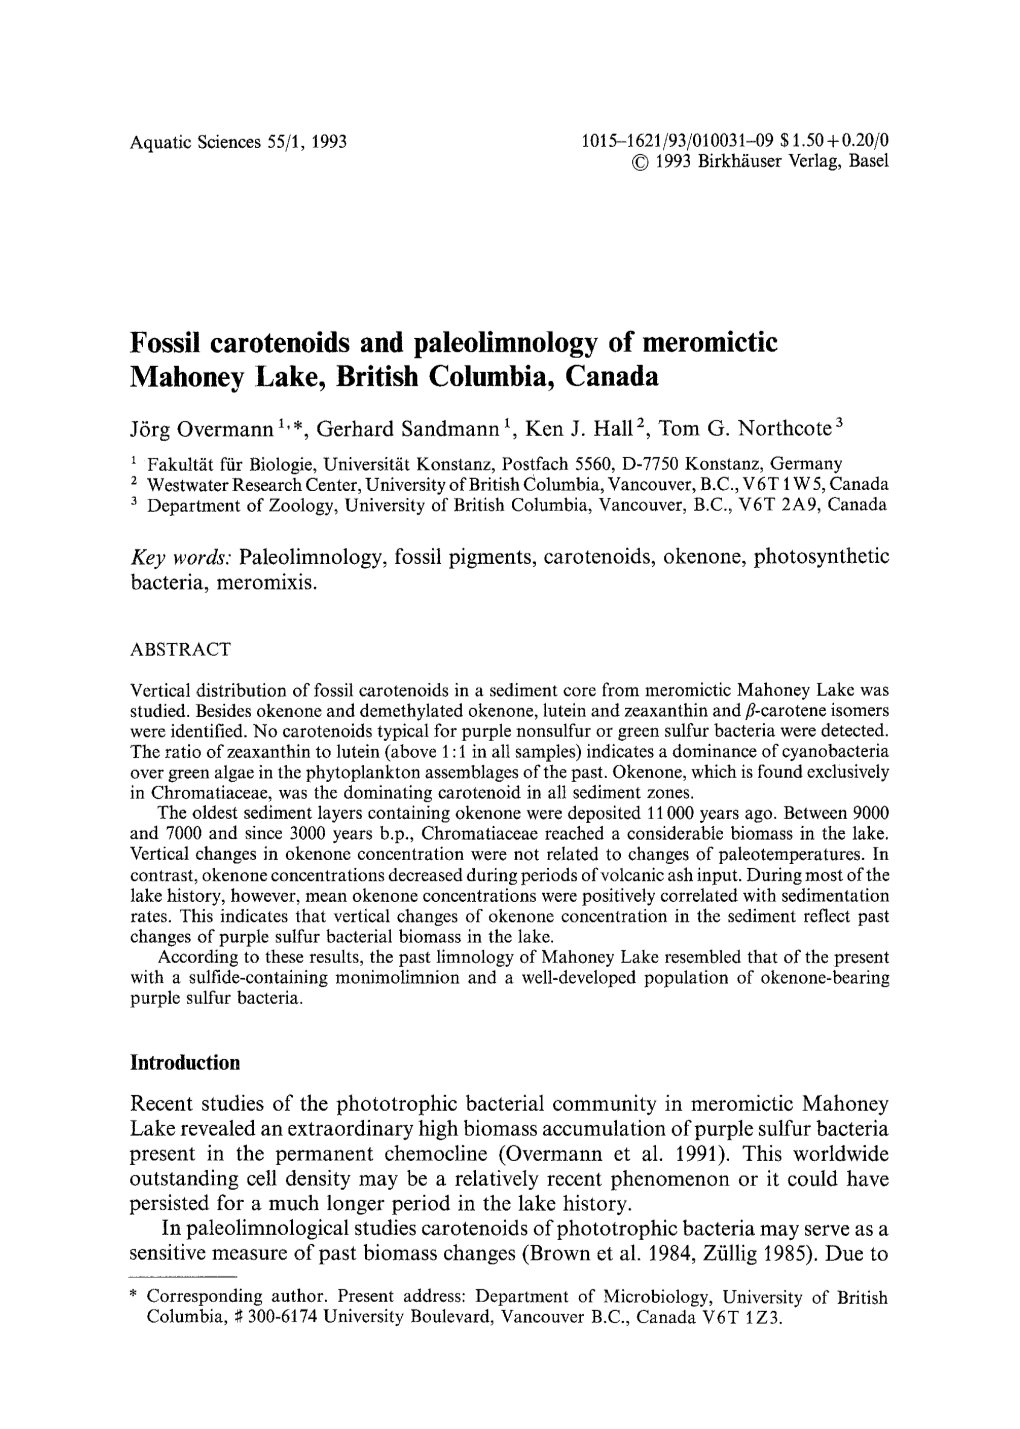 Fossil Carotenoids and Paleolimnology of Meromictic Mahoney Lake, British Columbia, Canada